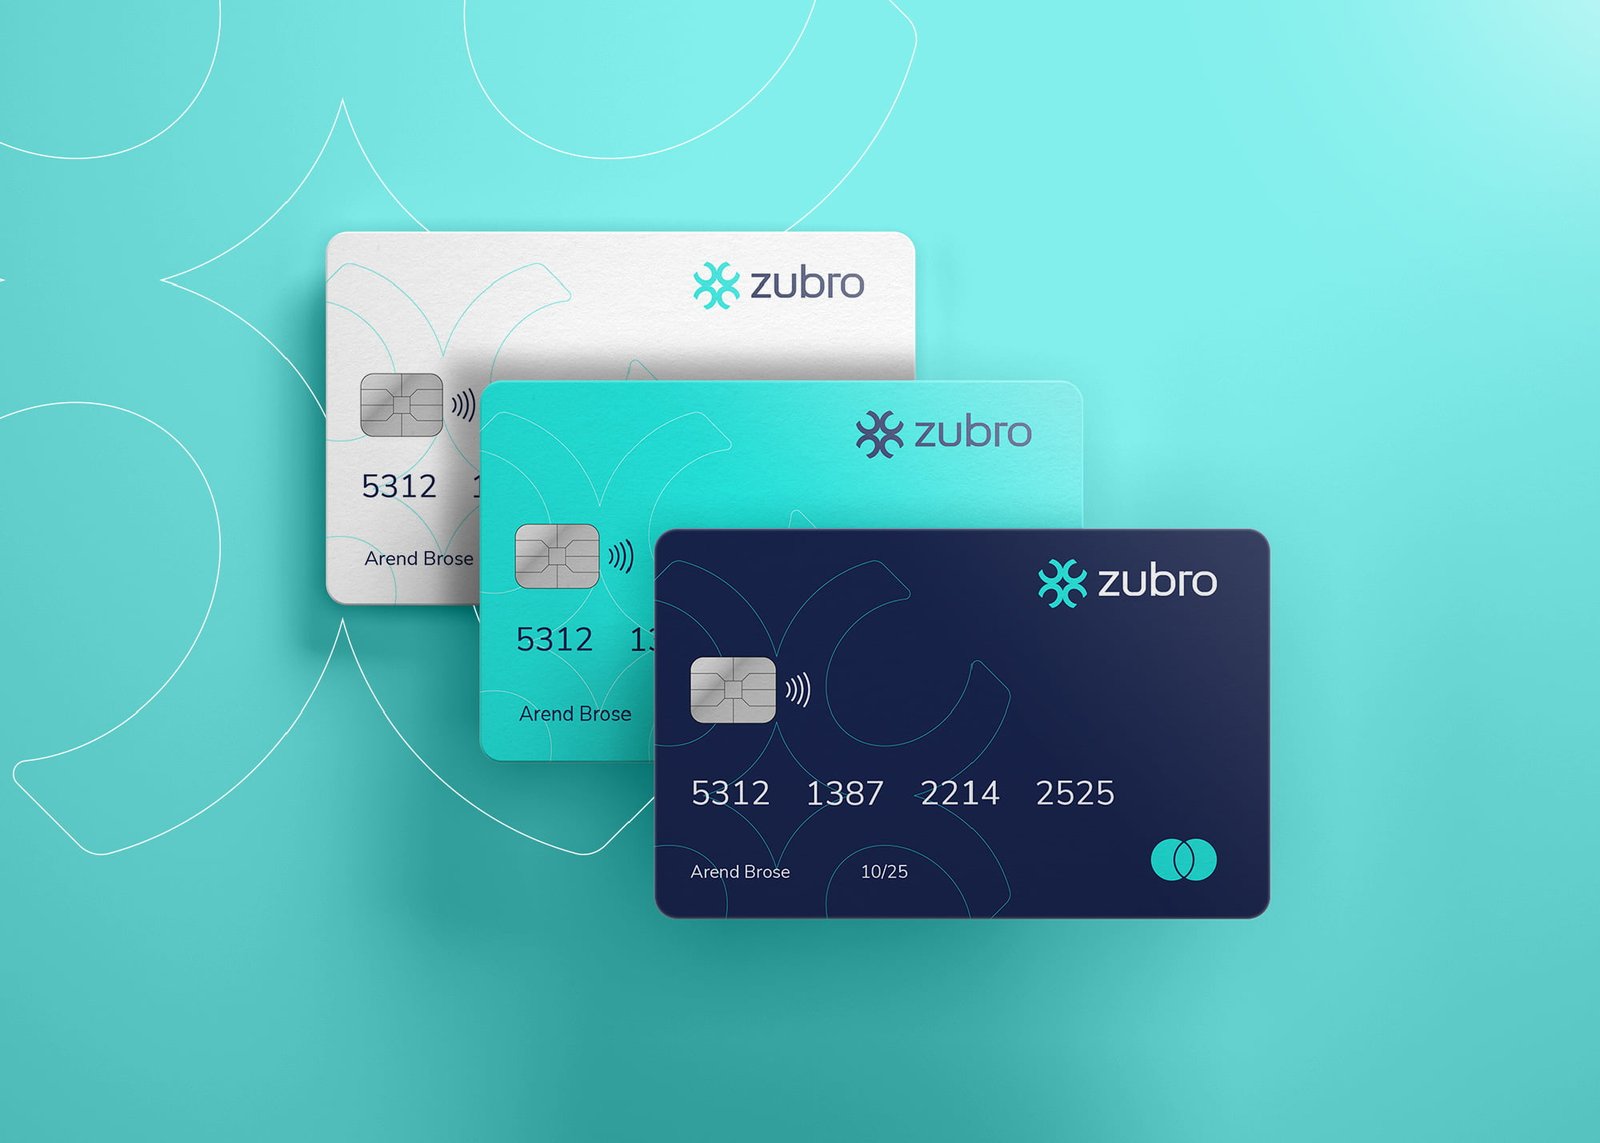 3 credit card designs, white, blue, and dark blue.